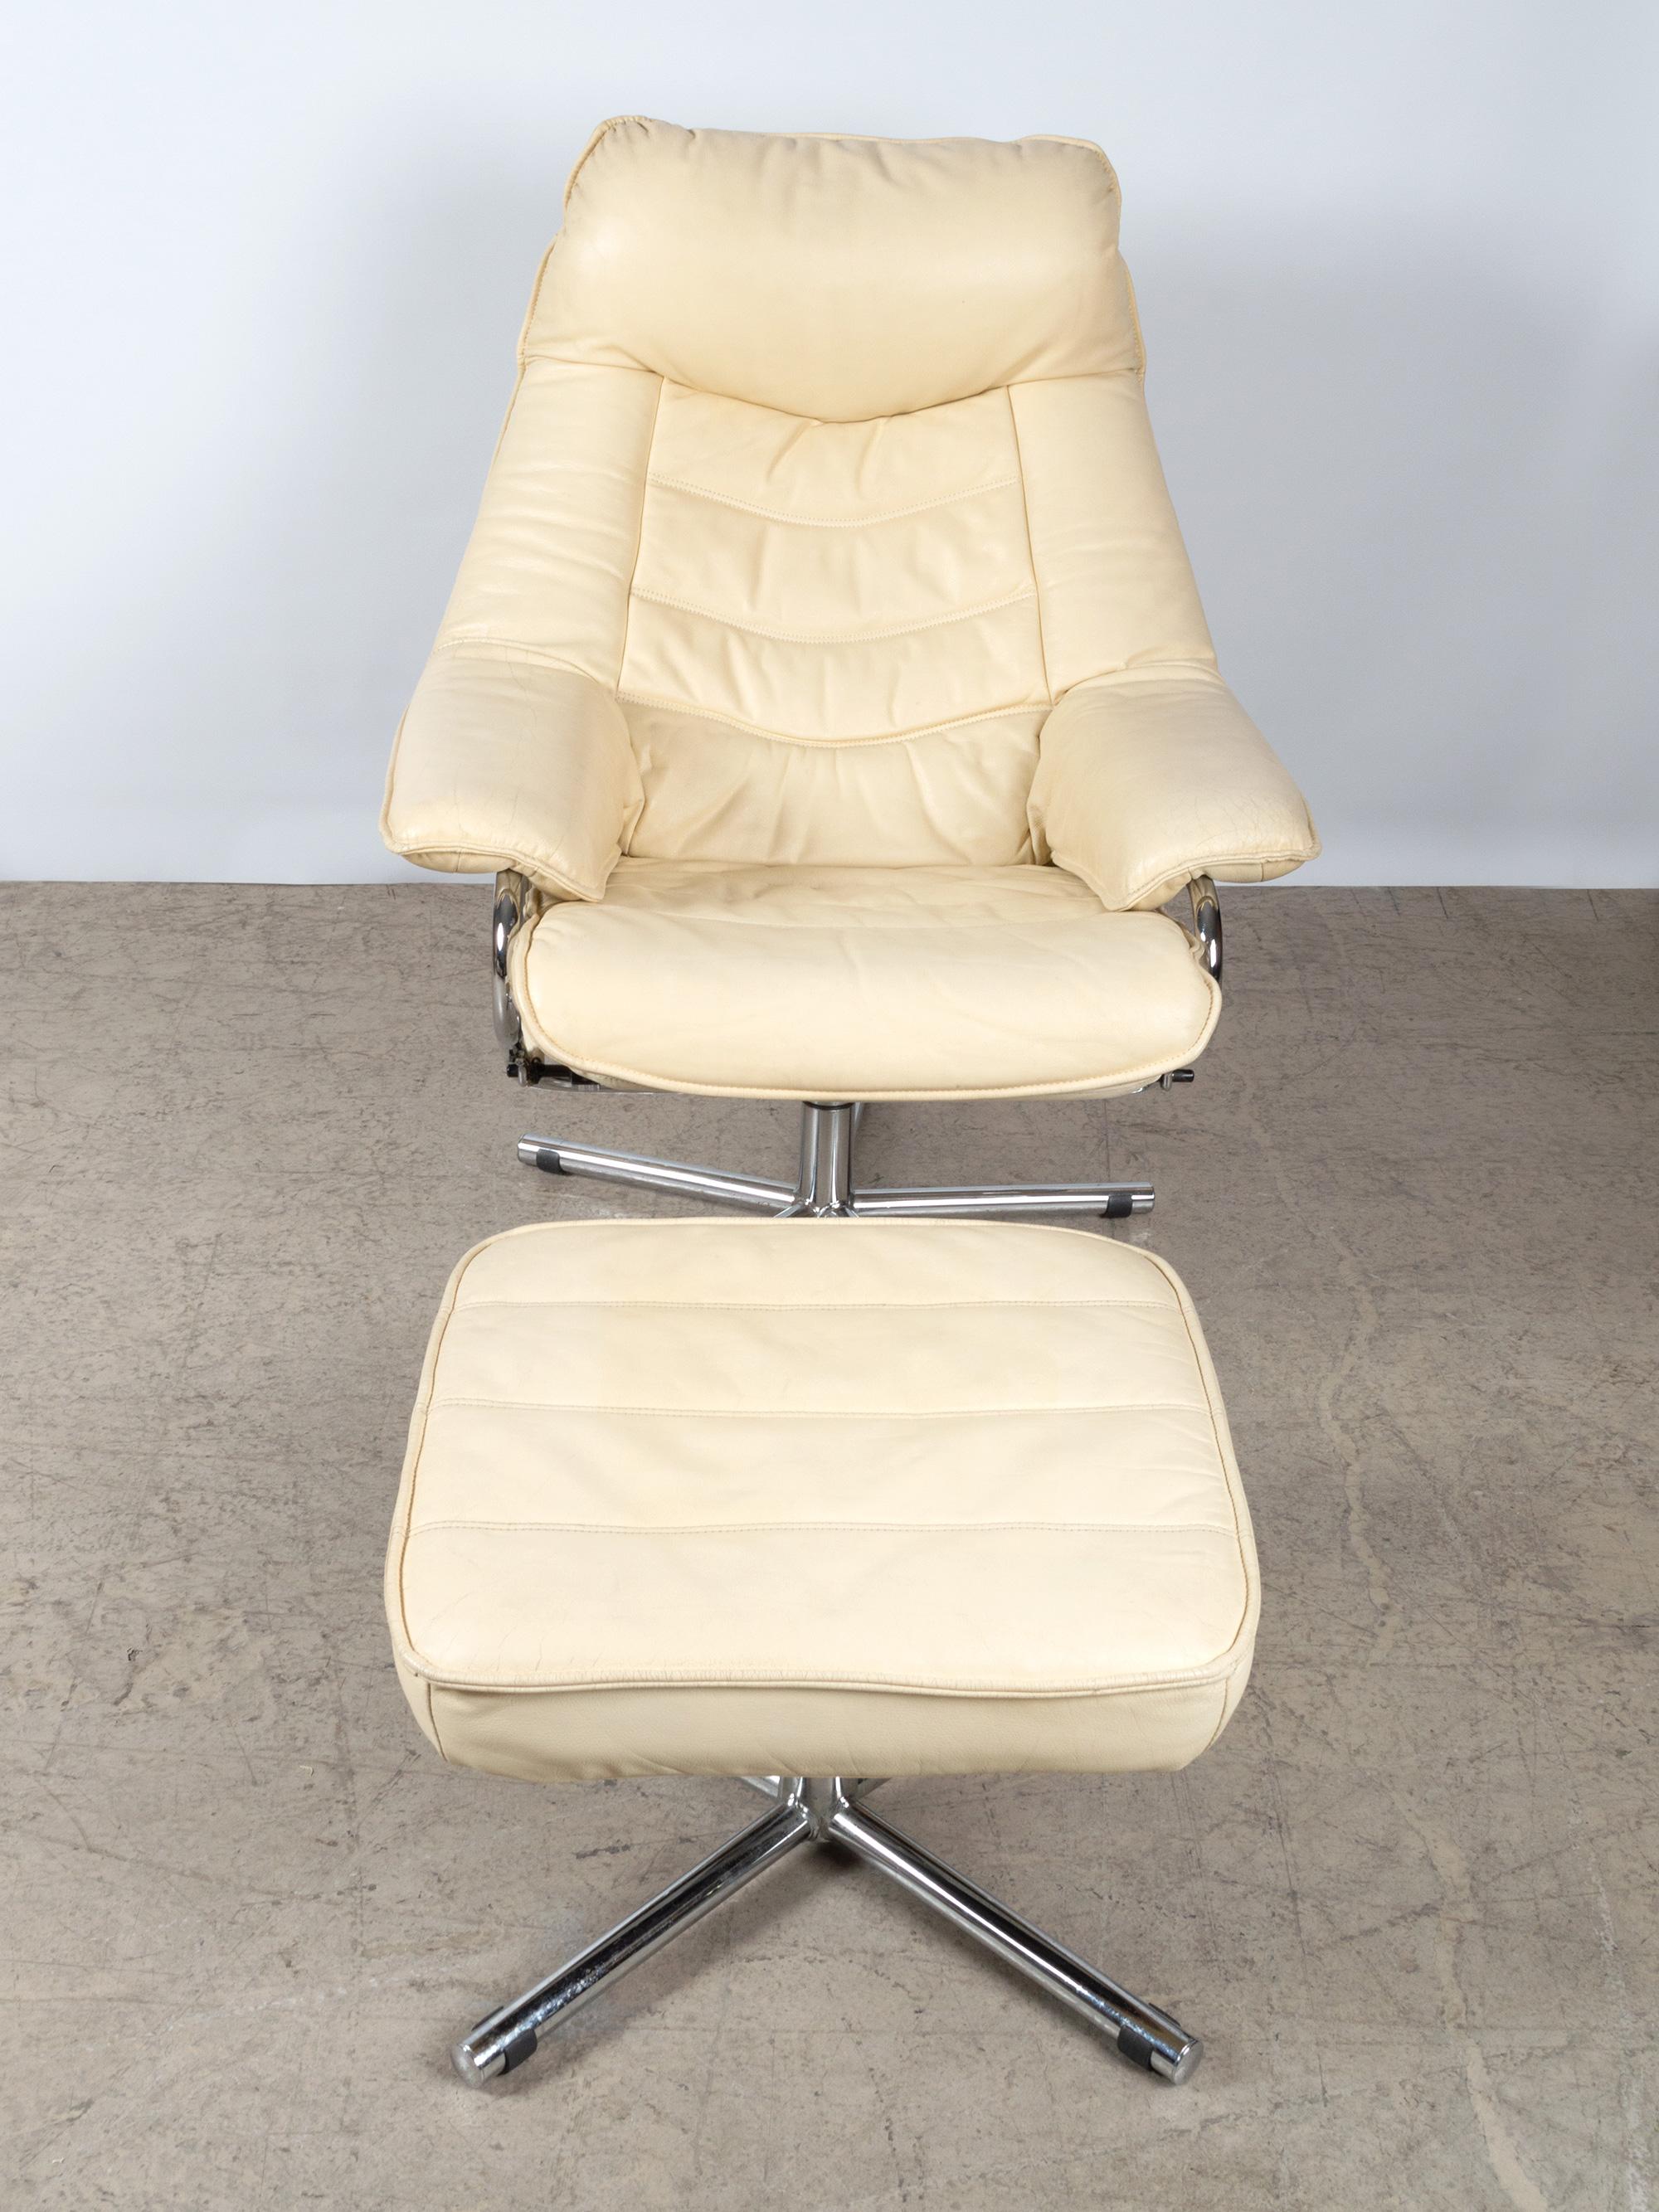 1970s recliner chair